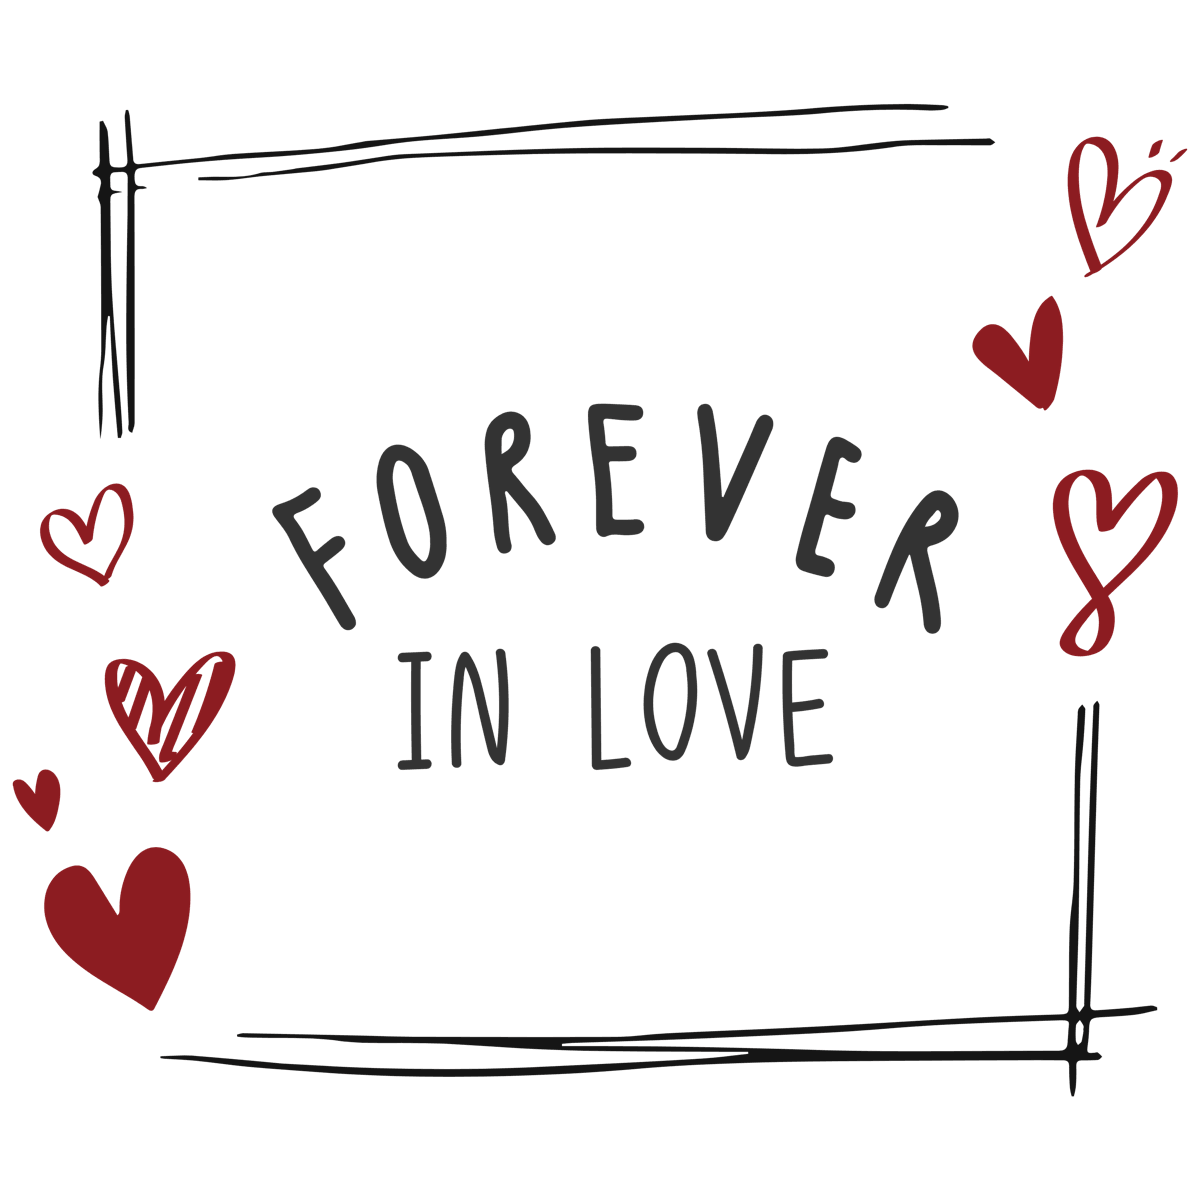 Forever in love - DuvetDay.co.uk